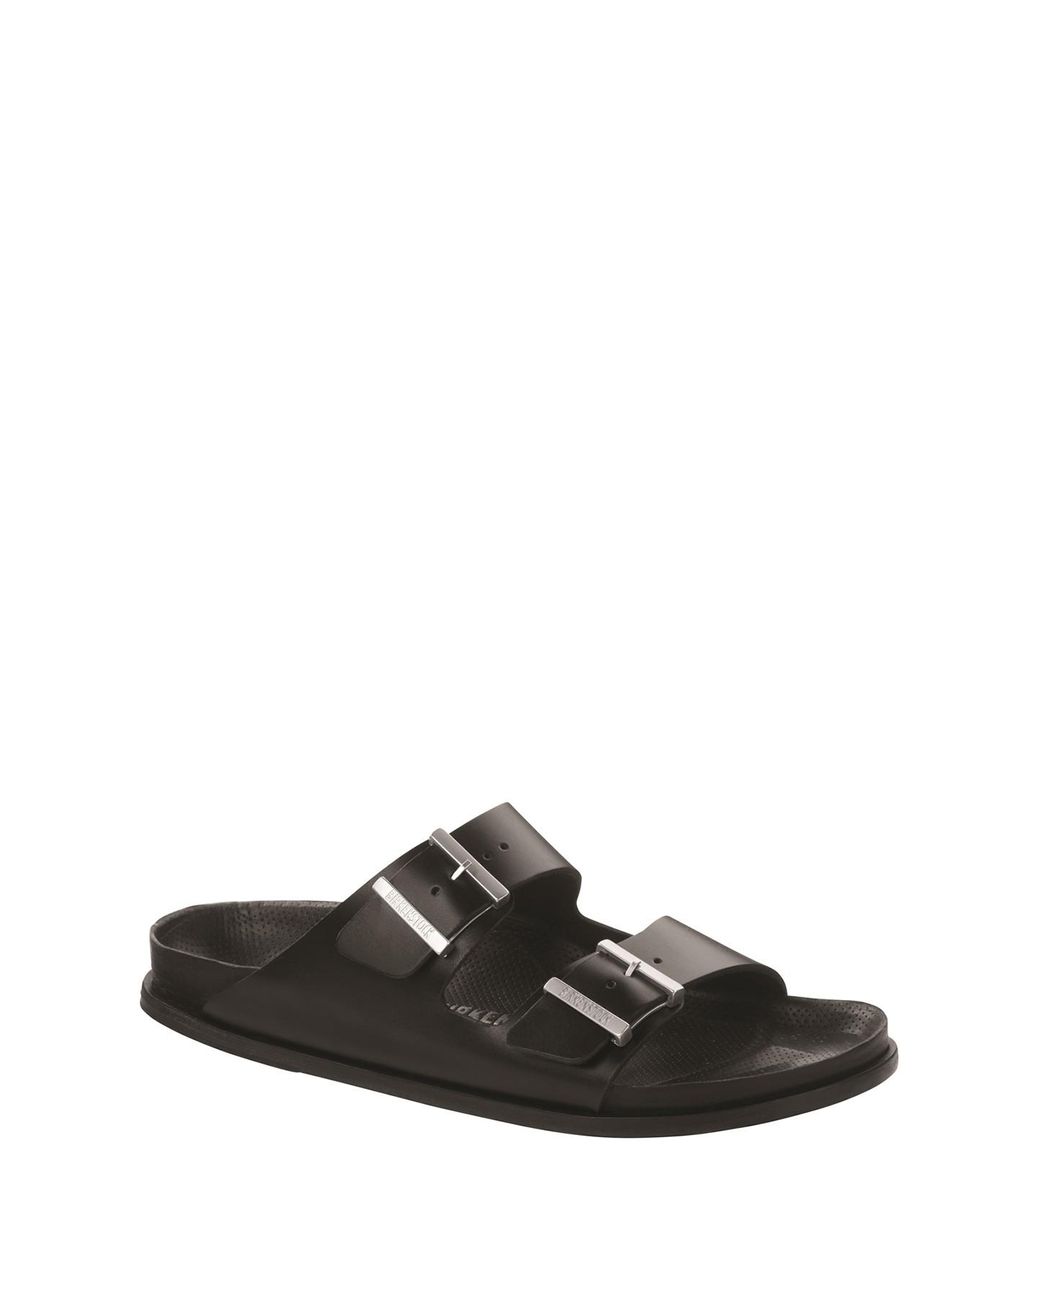 Birkenstock Arizona Premium Black Leather Sandal - Discontinued